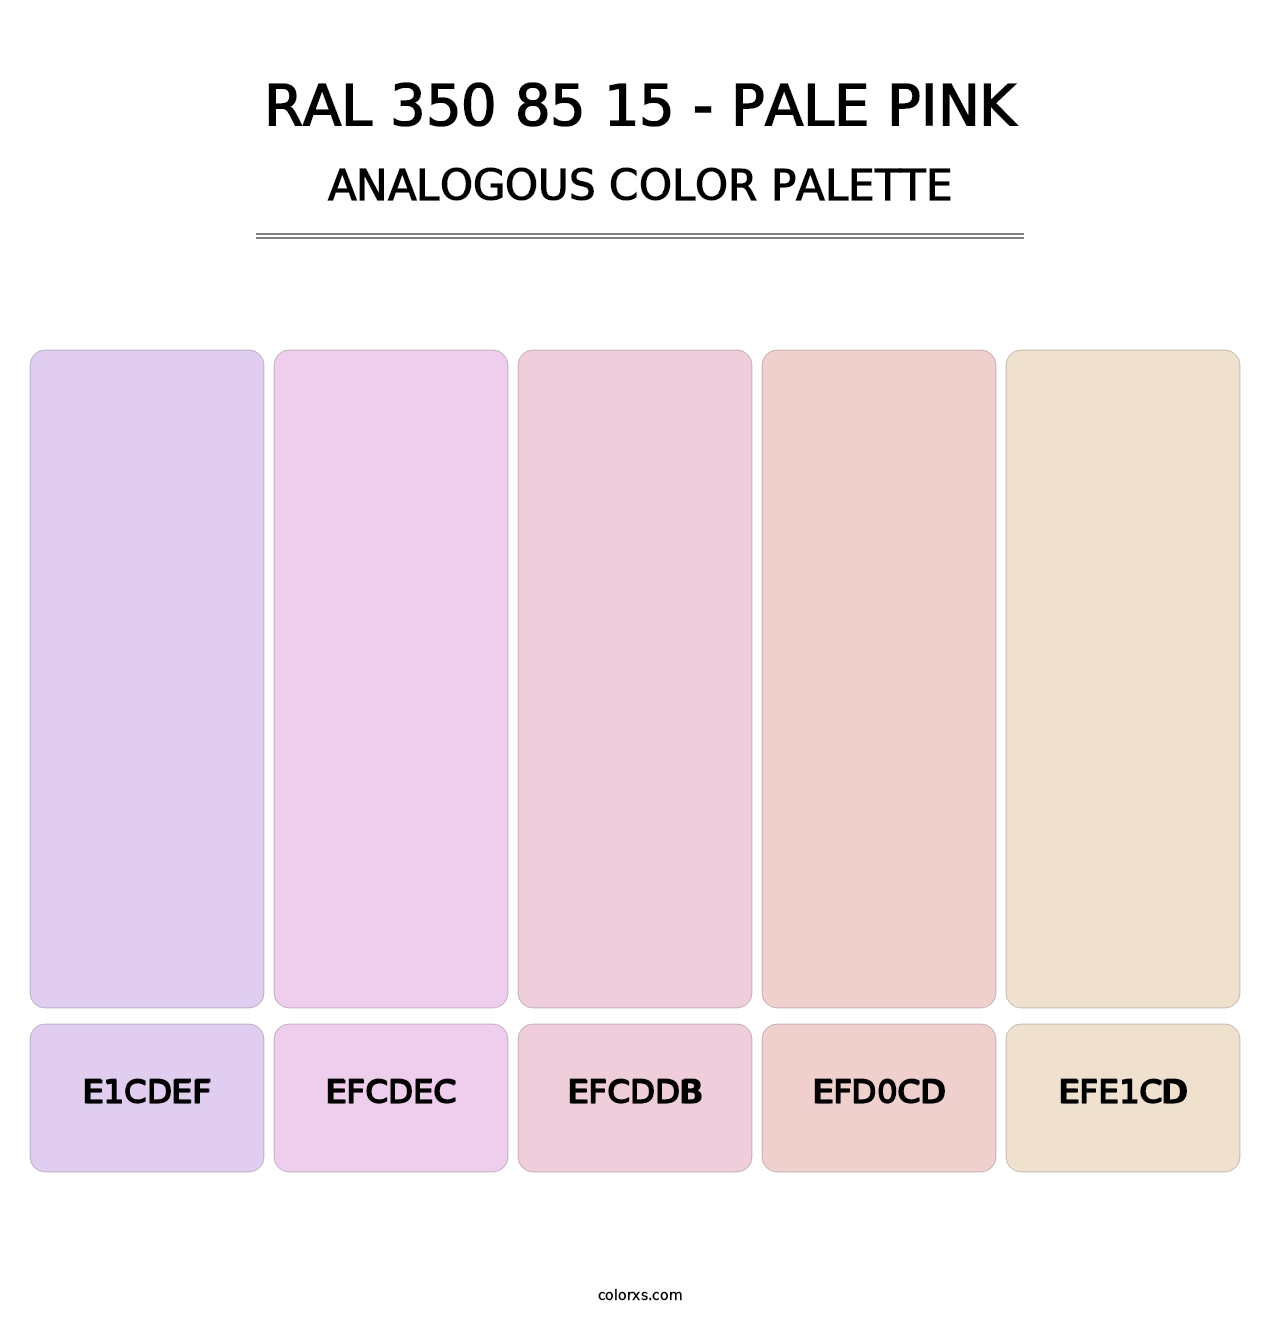 RAL 350 85 15 - Pale Pink - Analogous Color Palette